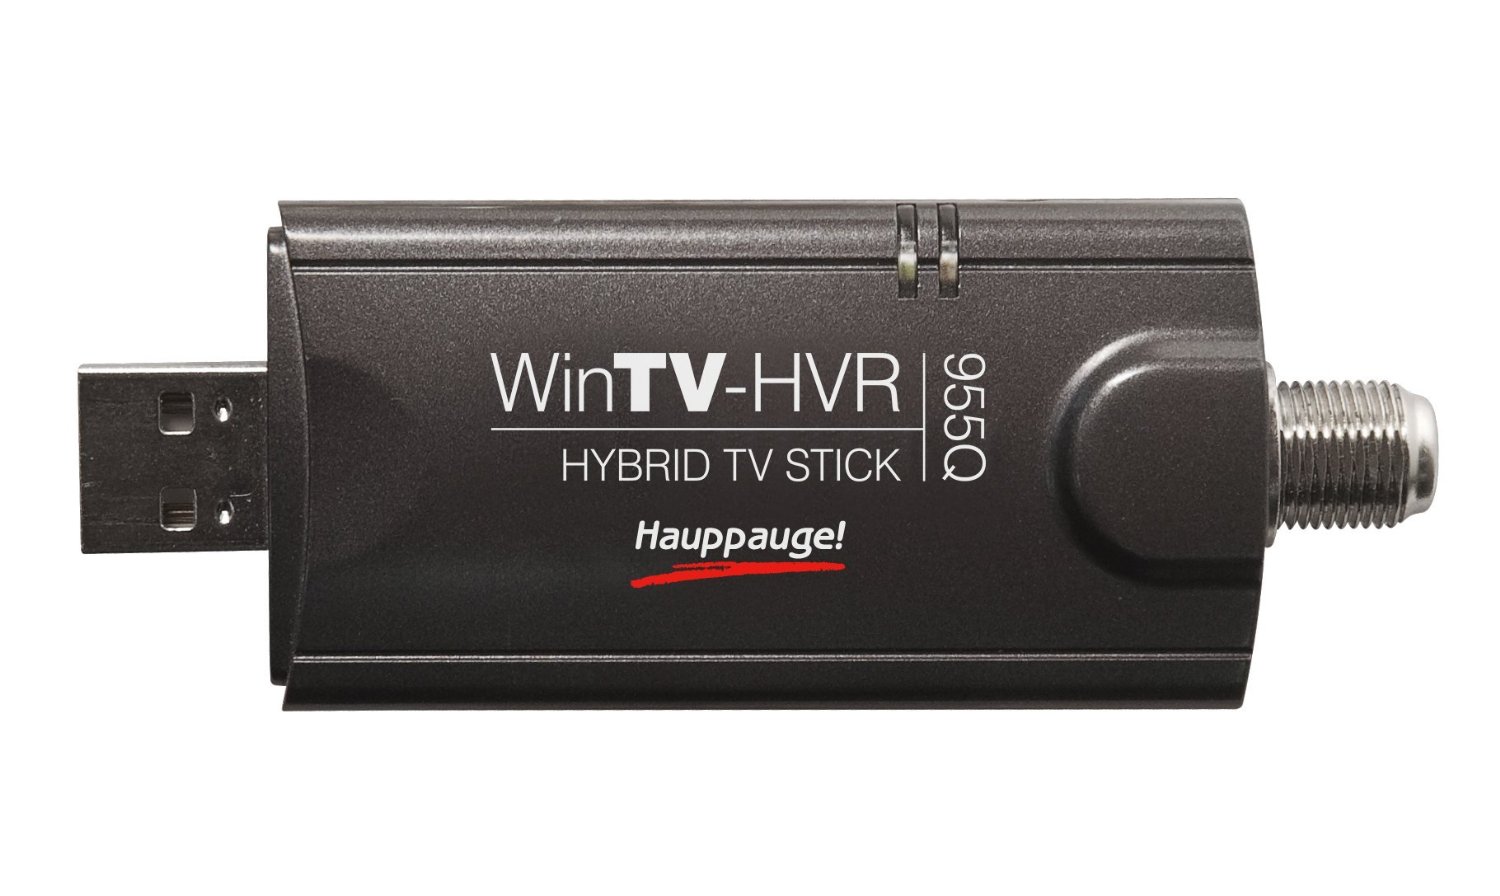 Review: Hauppauge 1191 WinTV-HVR-955Q USB TV Tuner For Notebook